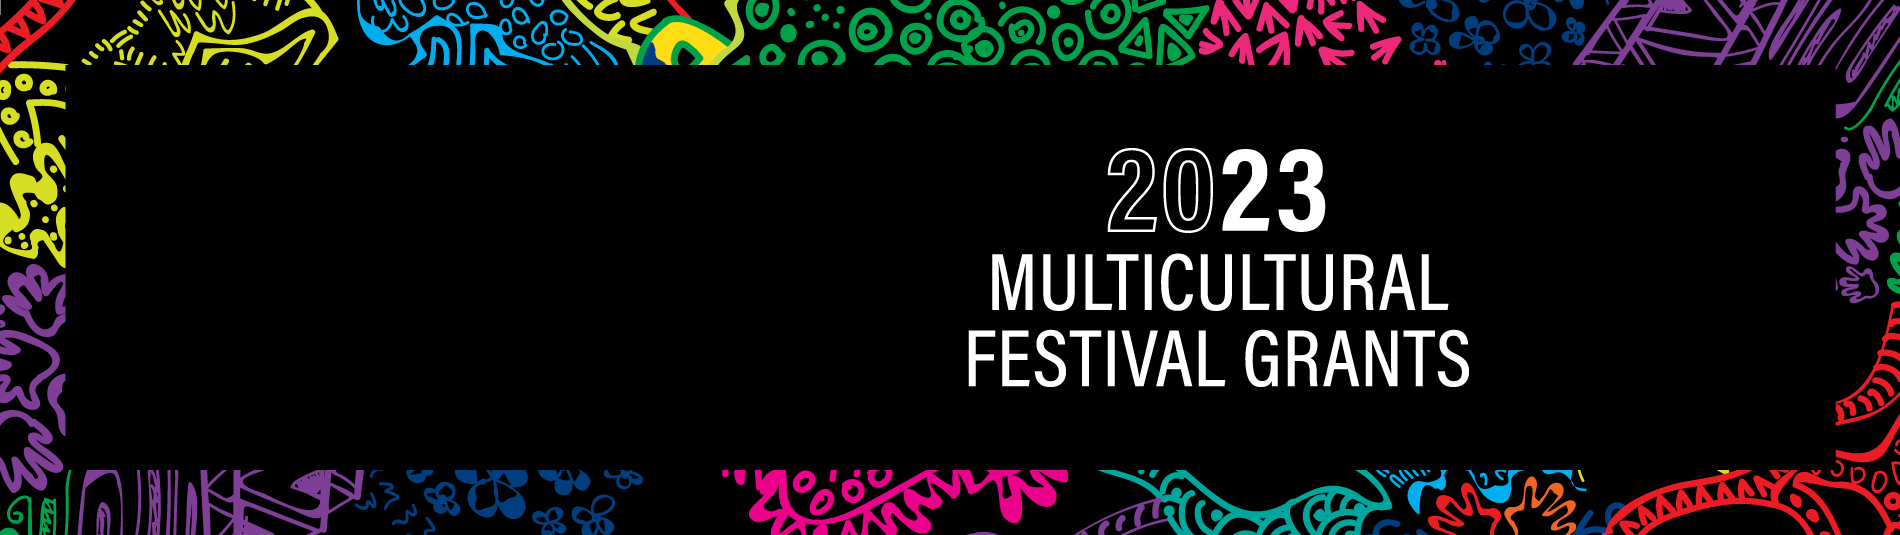 2023 Multicultural Festival Grants open